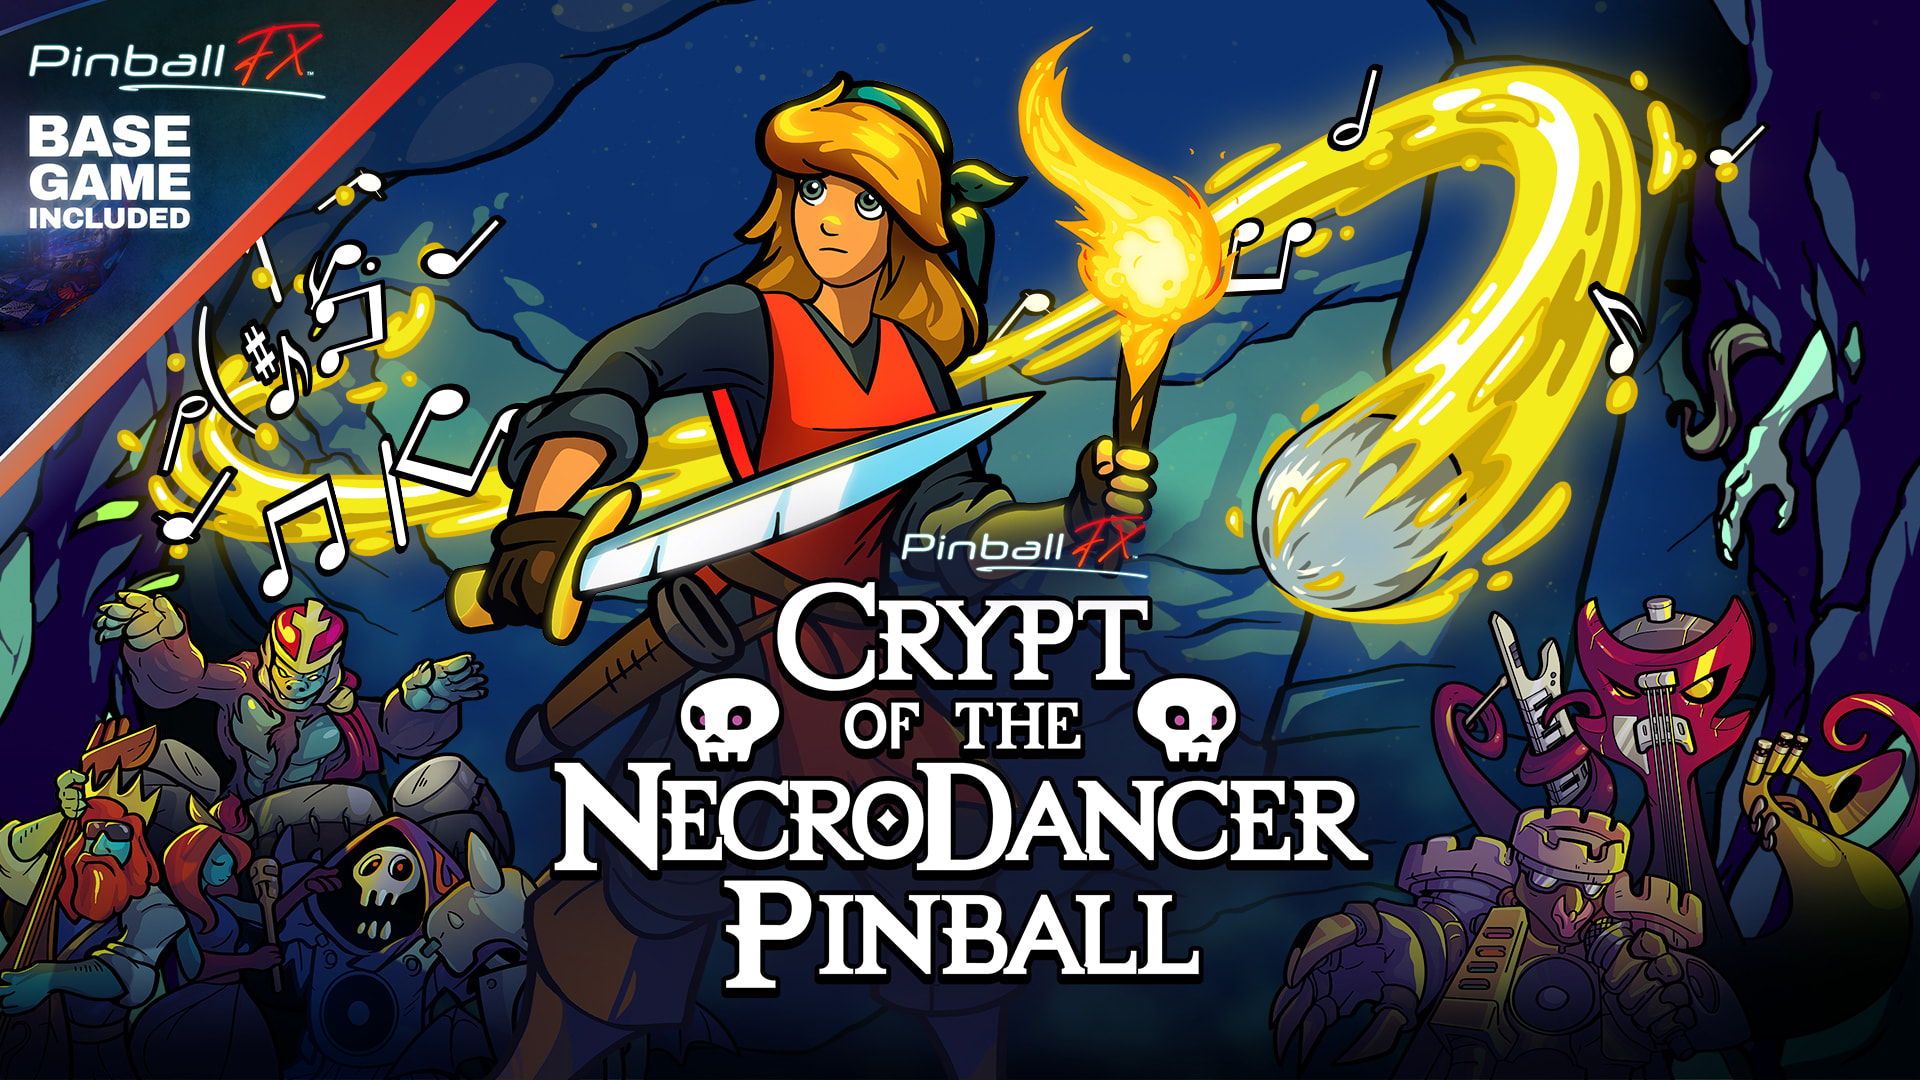 Pinball FX + Crypt of the NecroDancer Pinball Bundle